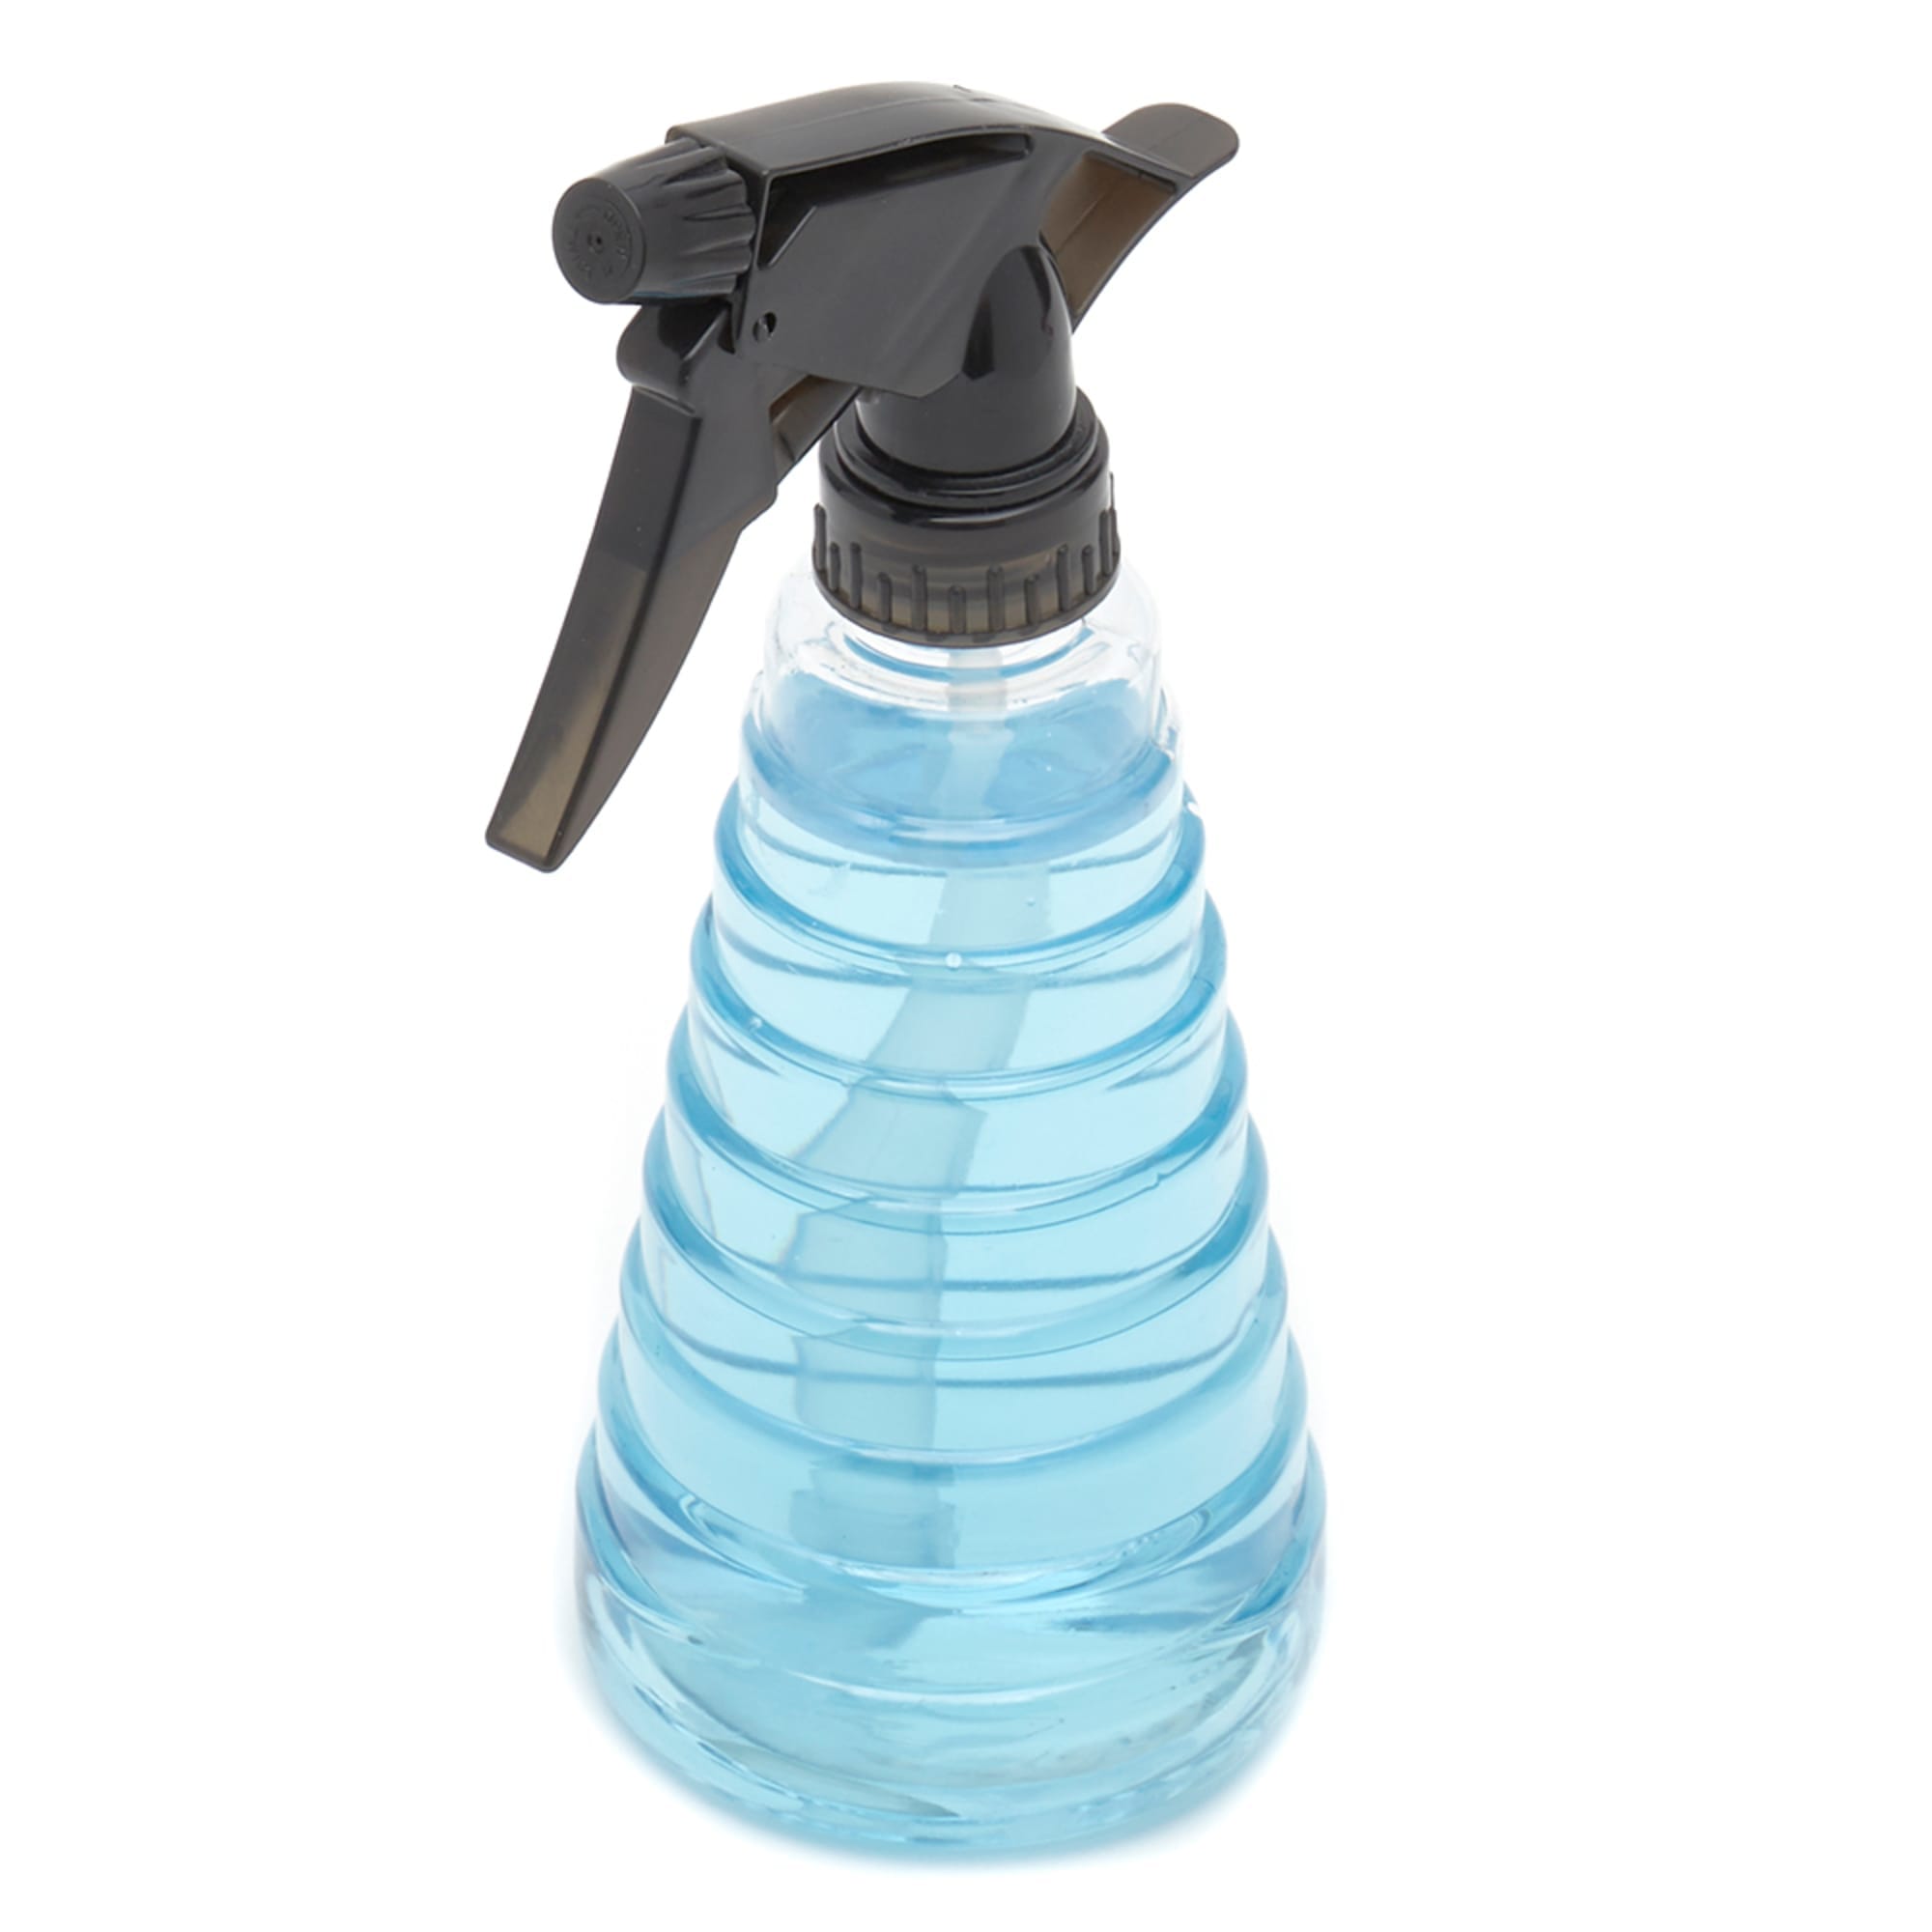 Home Basics 16 oz Spray Bottle, Clear $1.00 EACH, CASE PACK OF 24